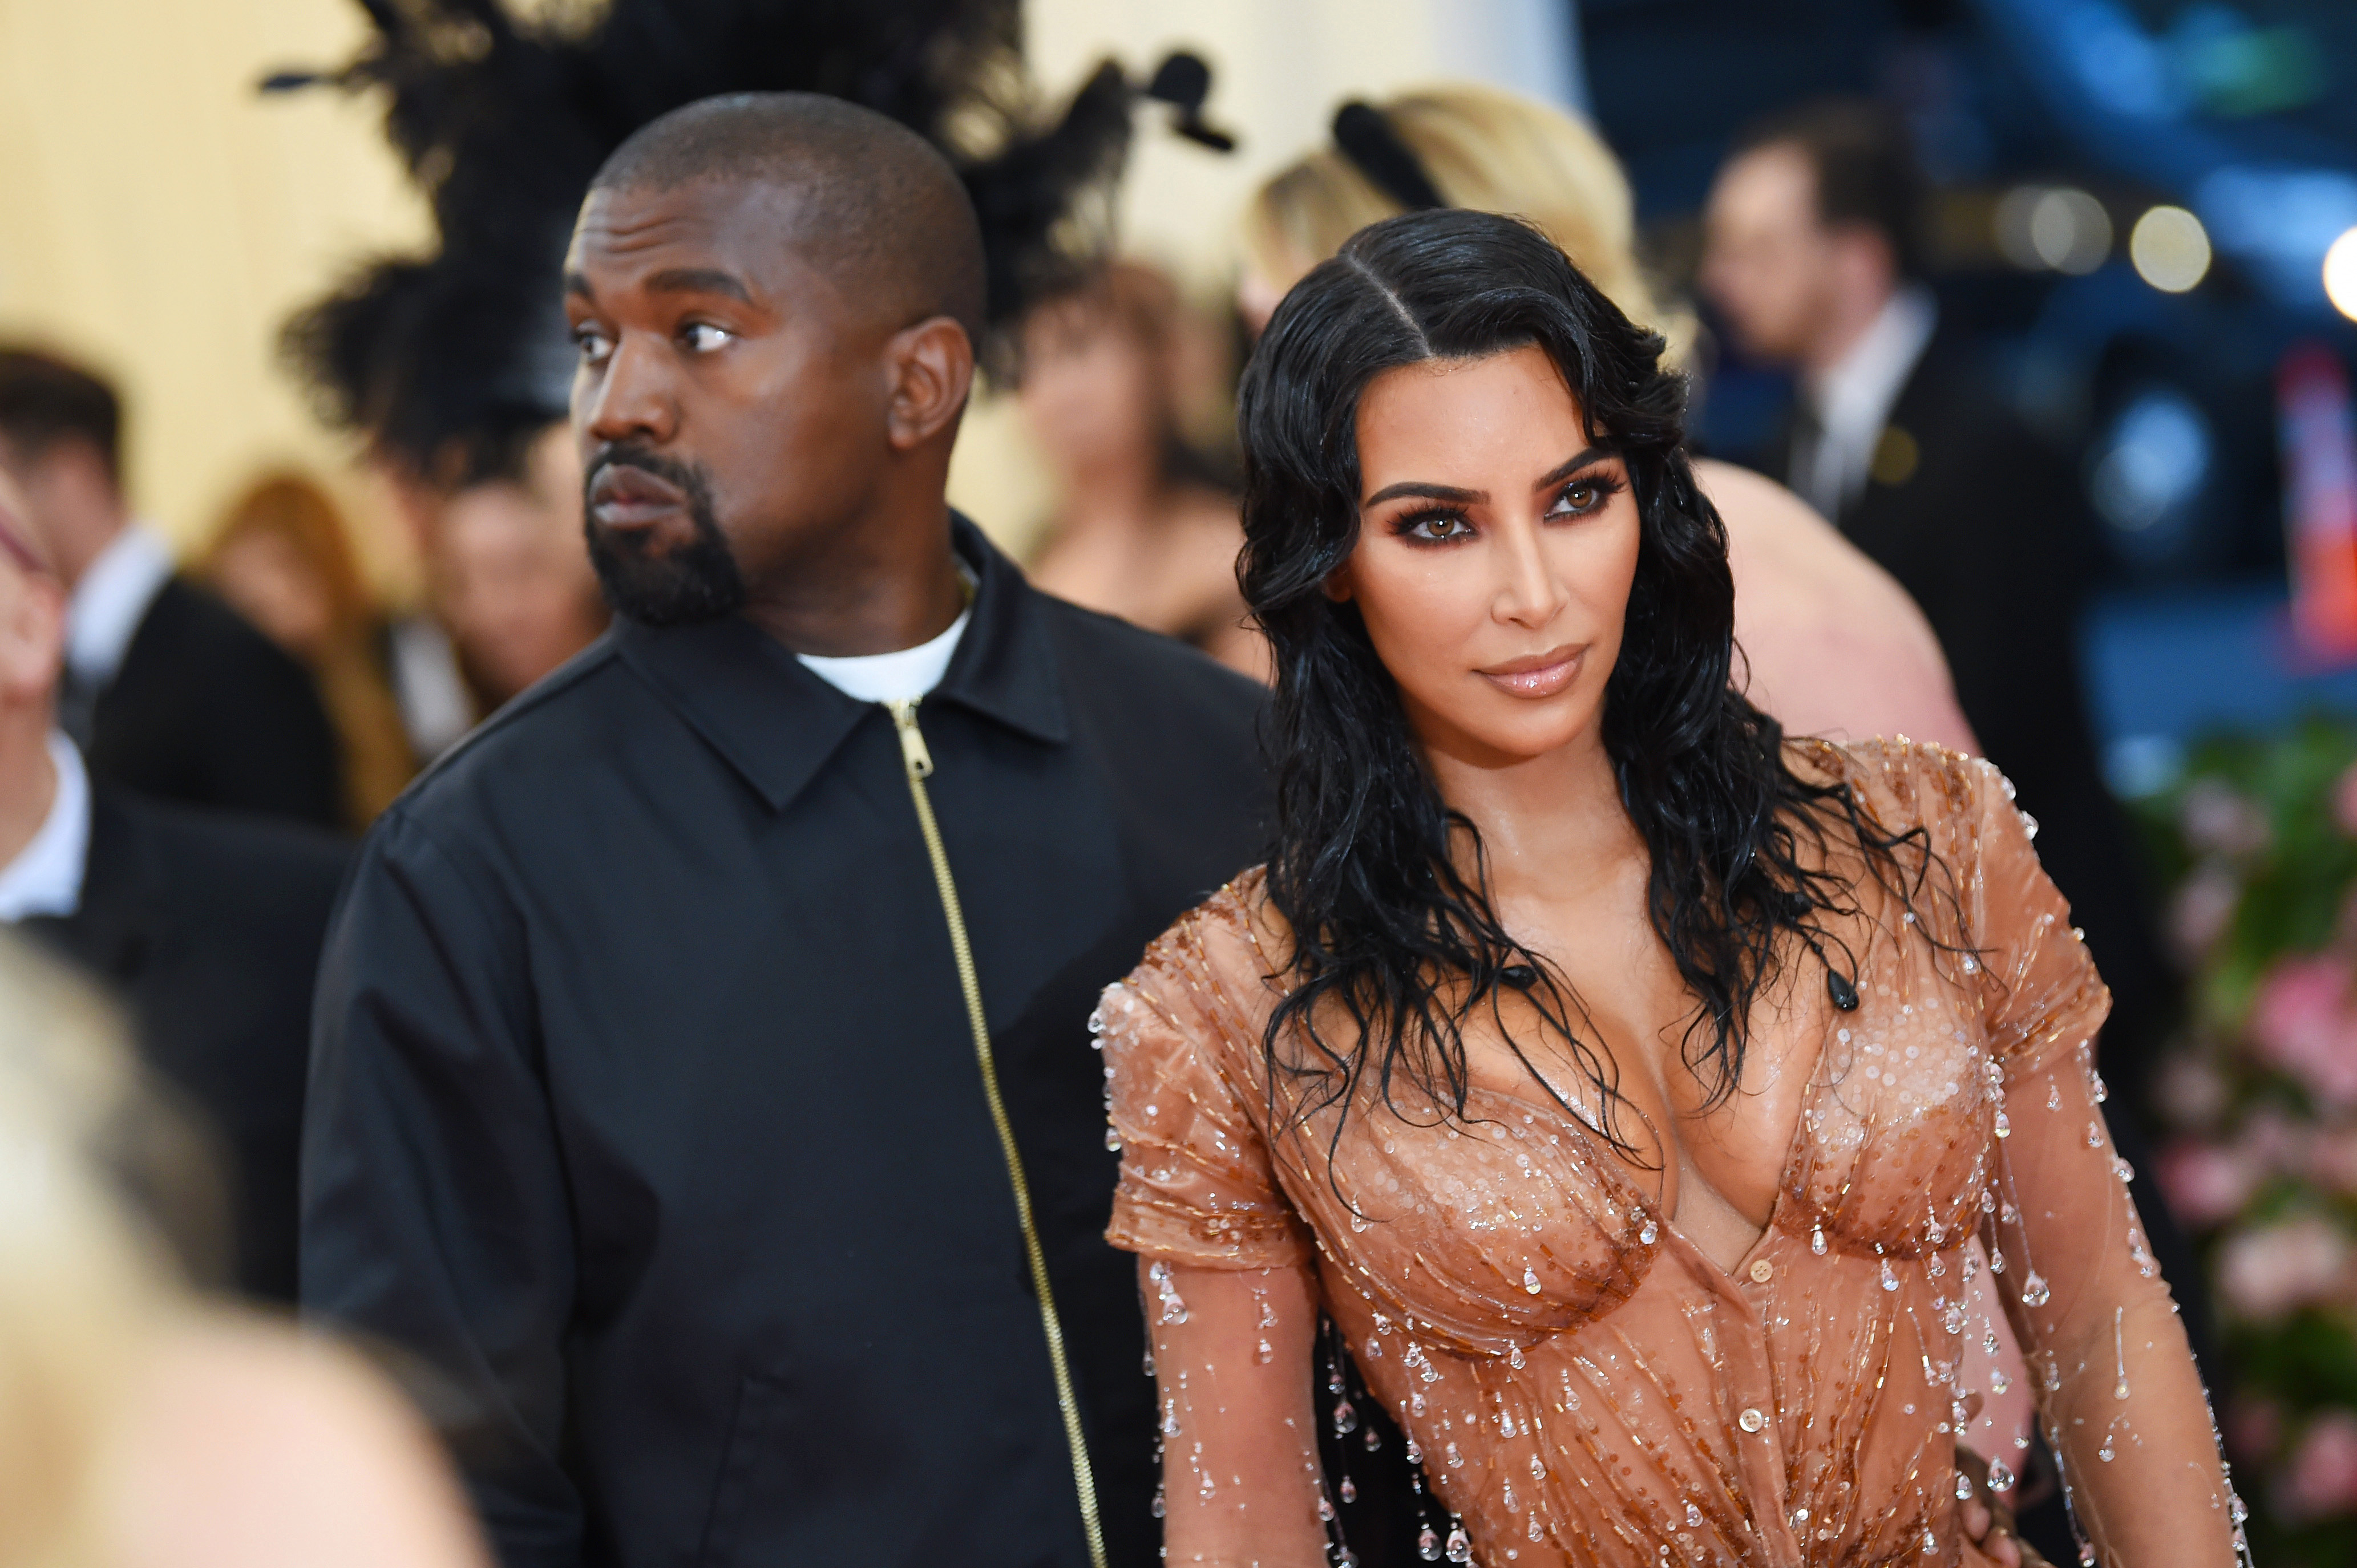 Kourtney Kardashian ‘trying really hard’ to support sister Kim through Kanye West divorce